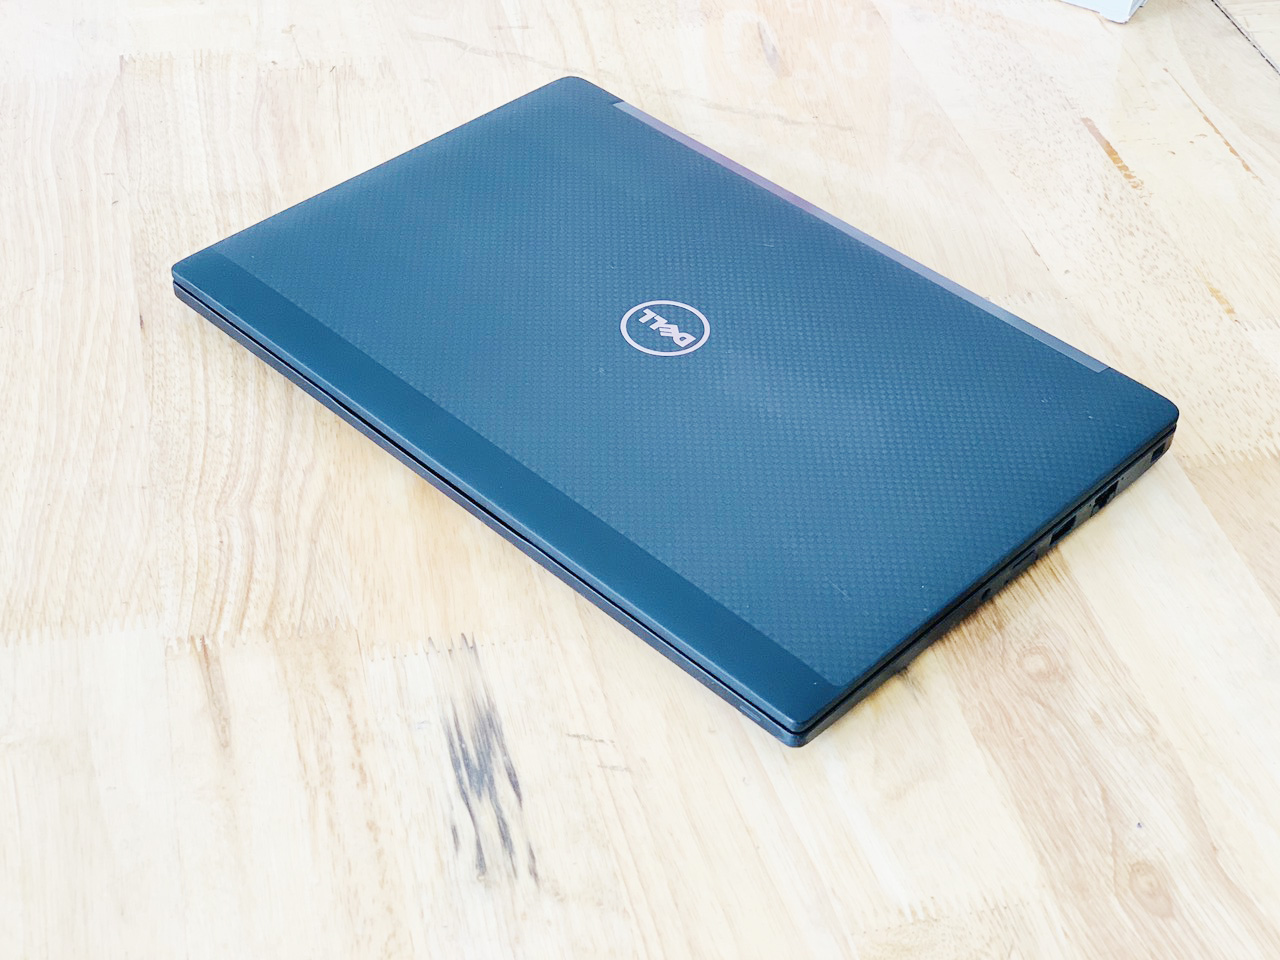 Laptop Dell Latitude E7280 i5-7300U Ram  8G SSD 256G 12.5 inch Cảm Ứng Full HD